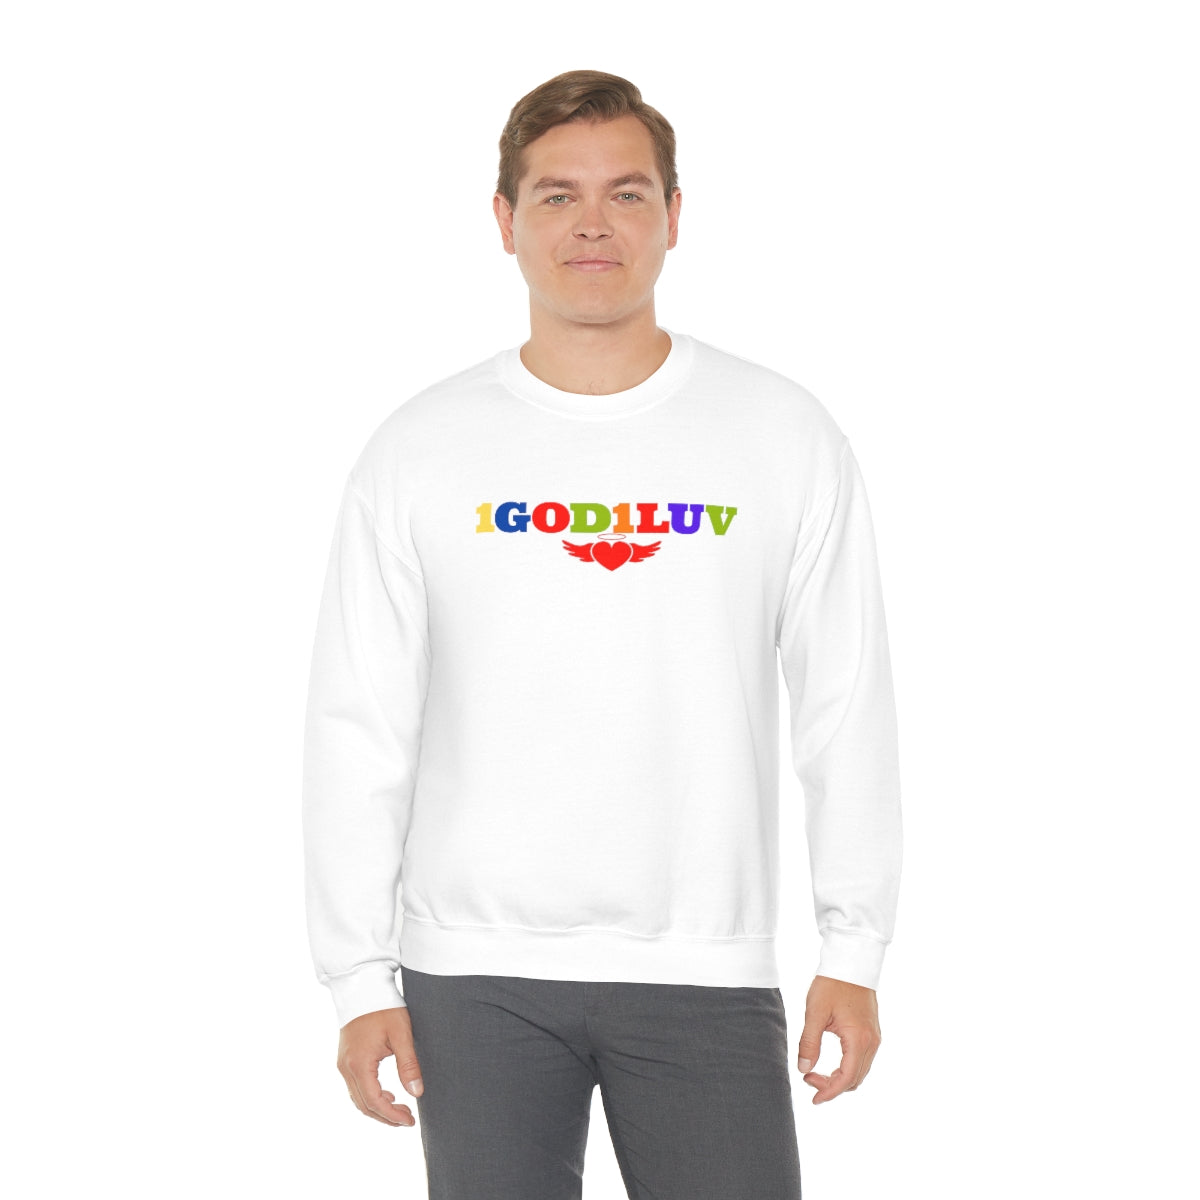 1God1LUV (Love) Unisex Heavy Blend™ Crewneck Sweatshirt